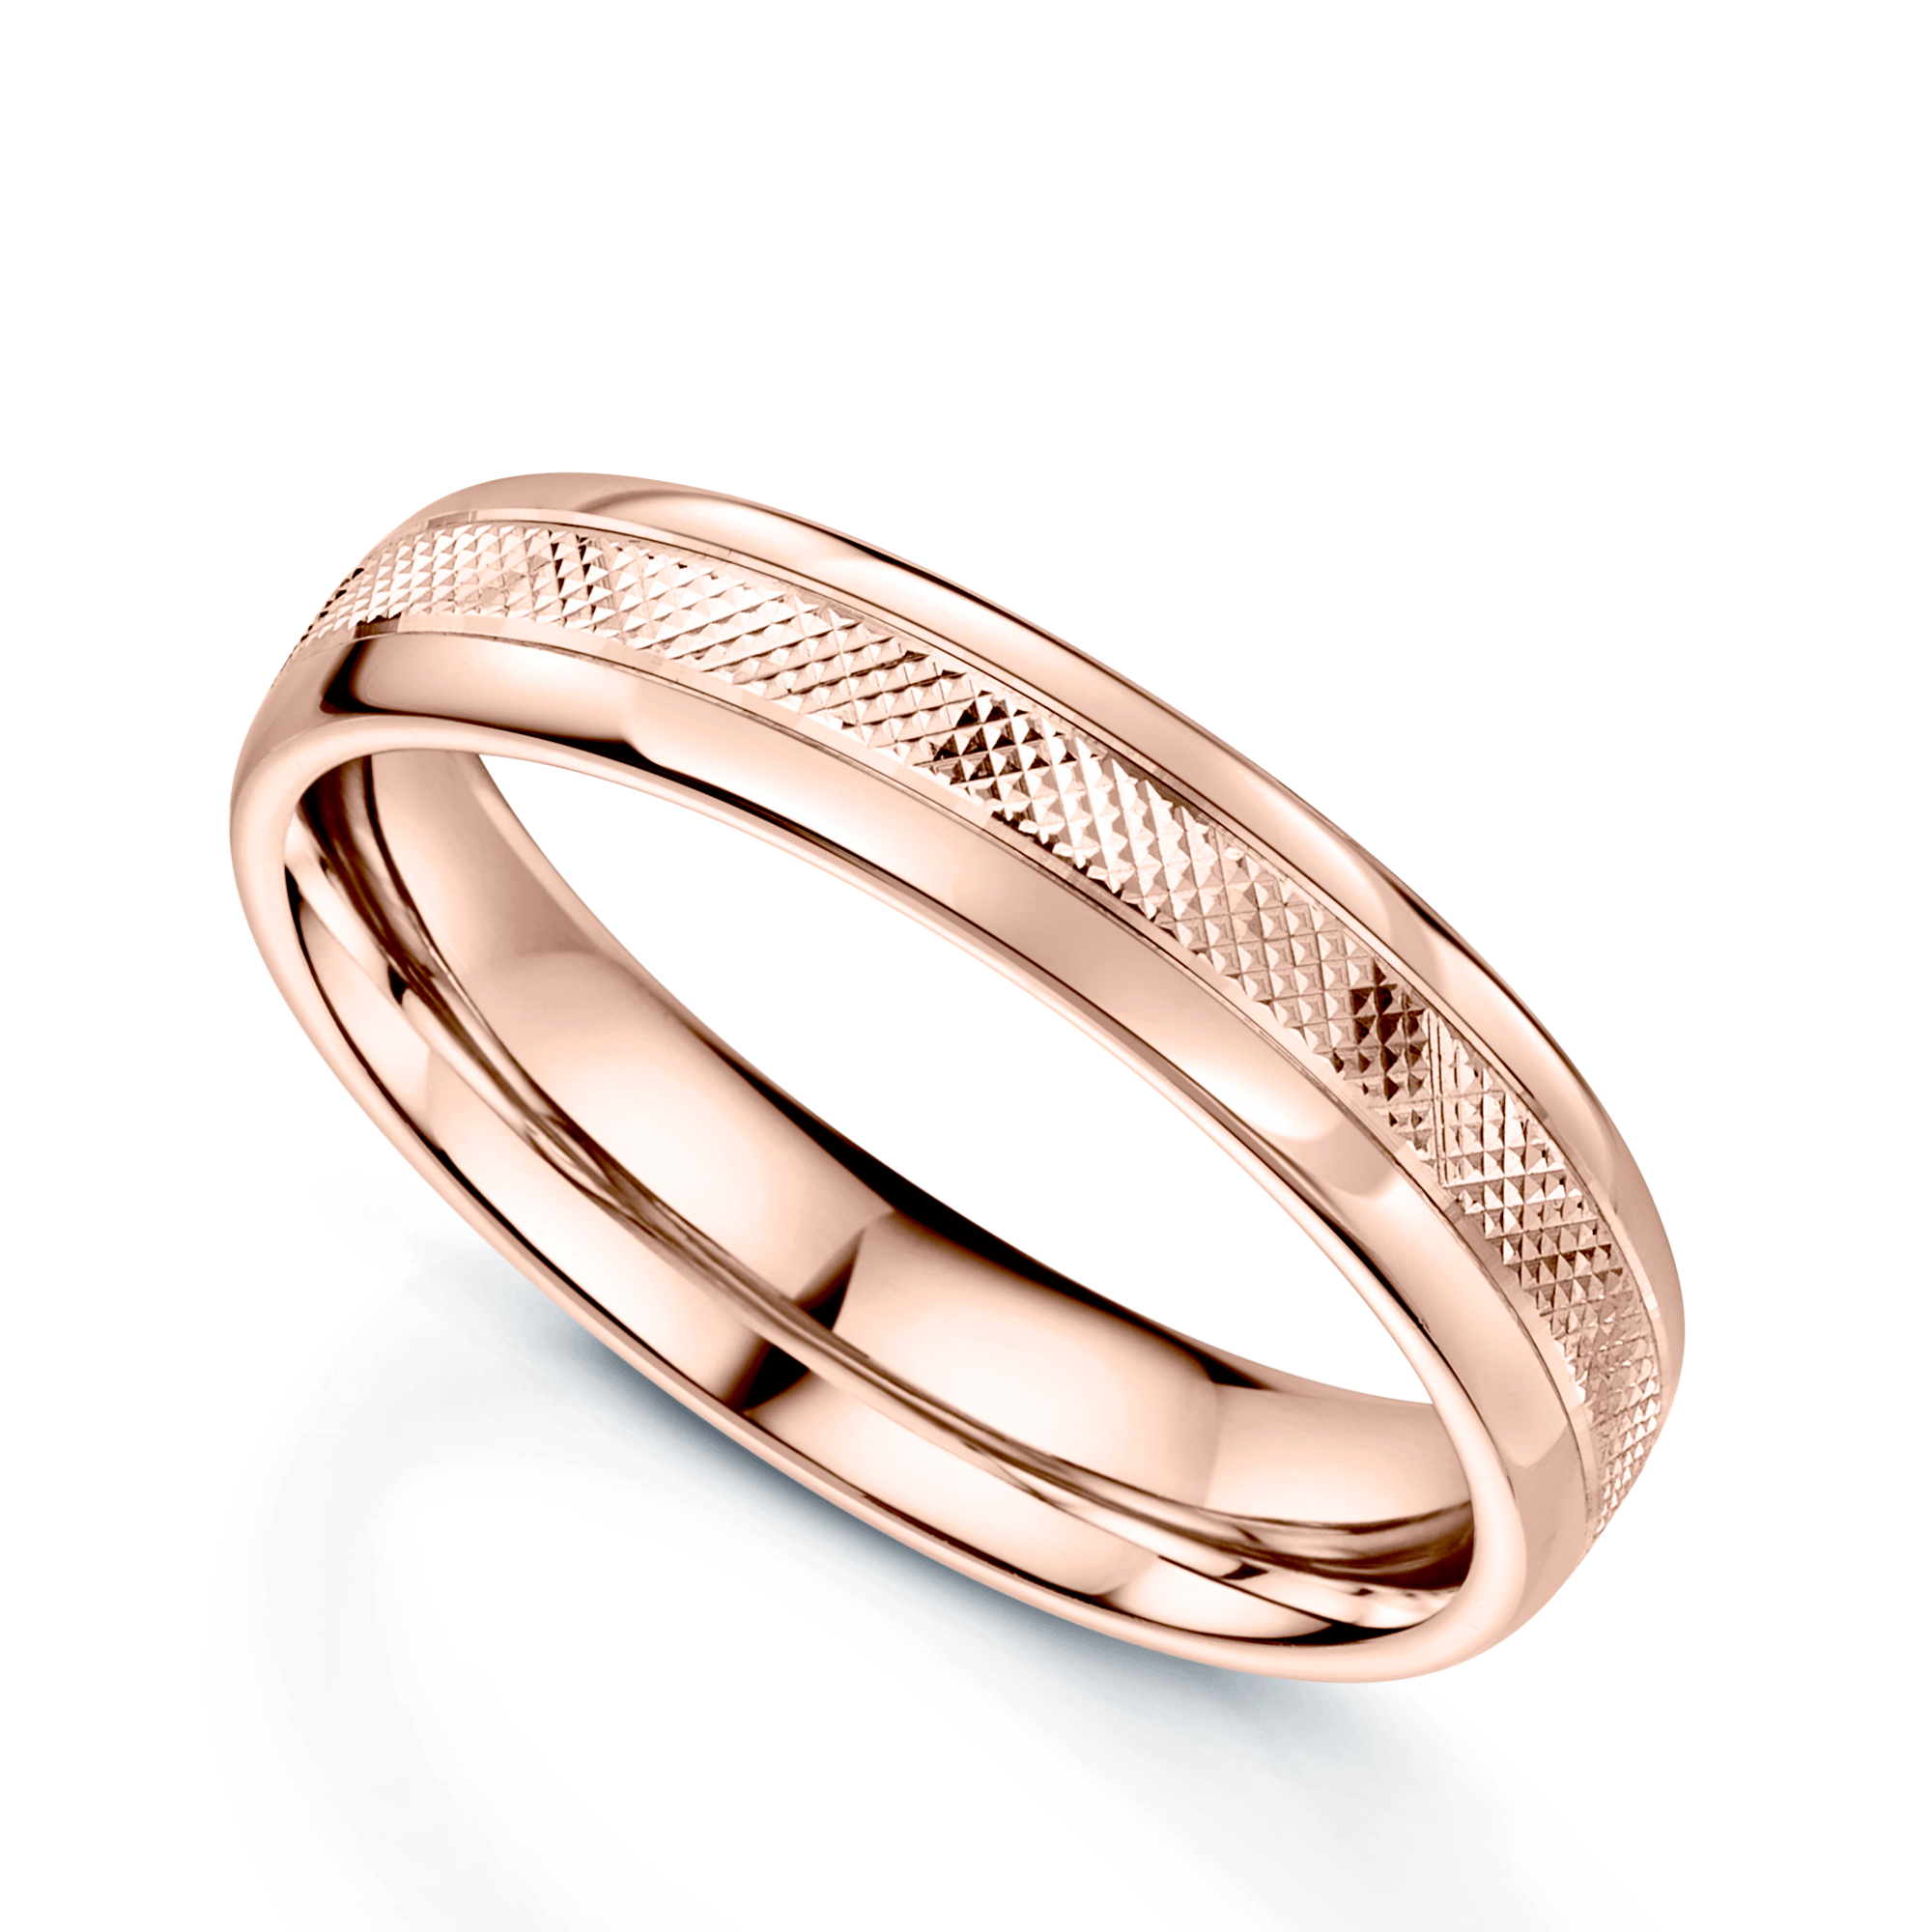 18ct Rose Gold Criss-Cross Patterned Polished Flat Court Shape Wedding Ring